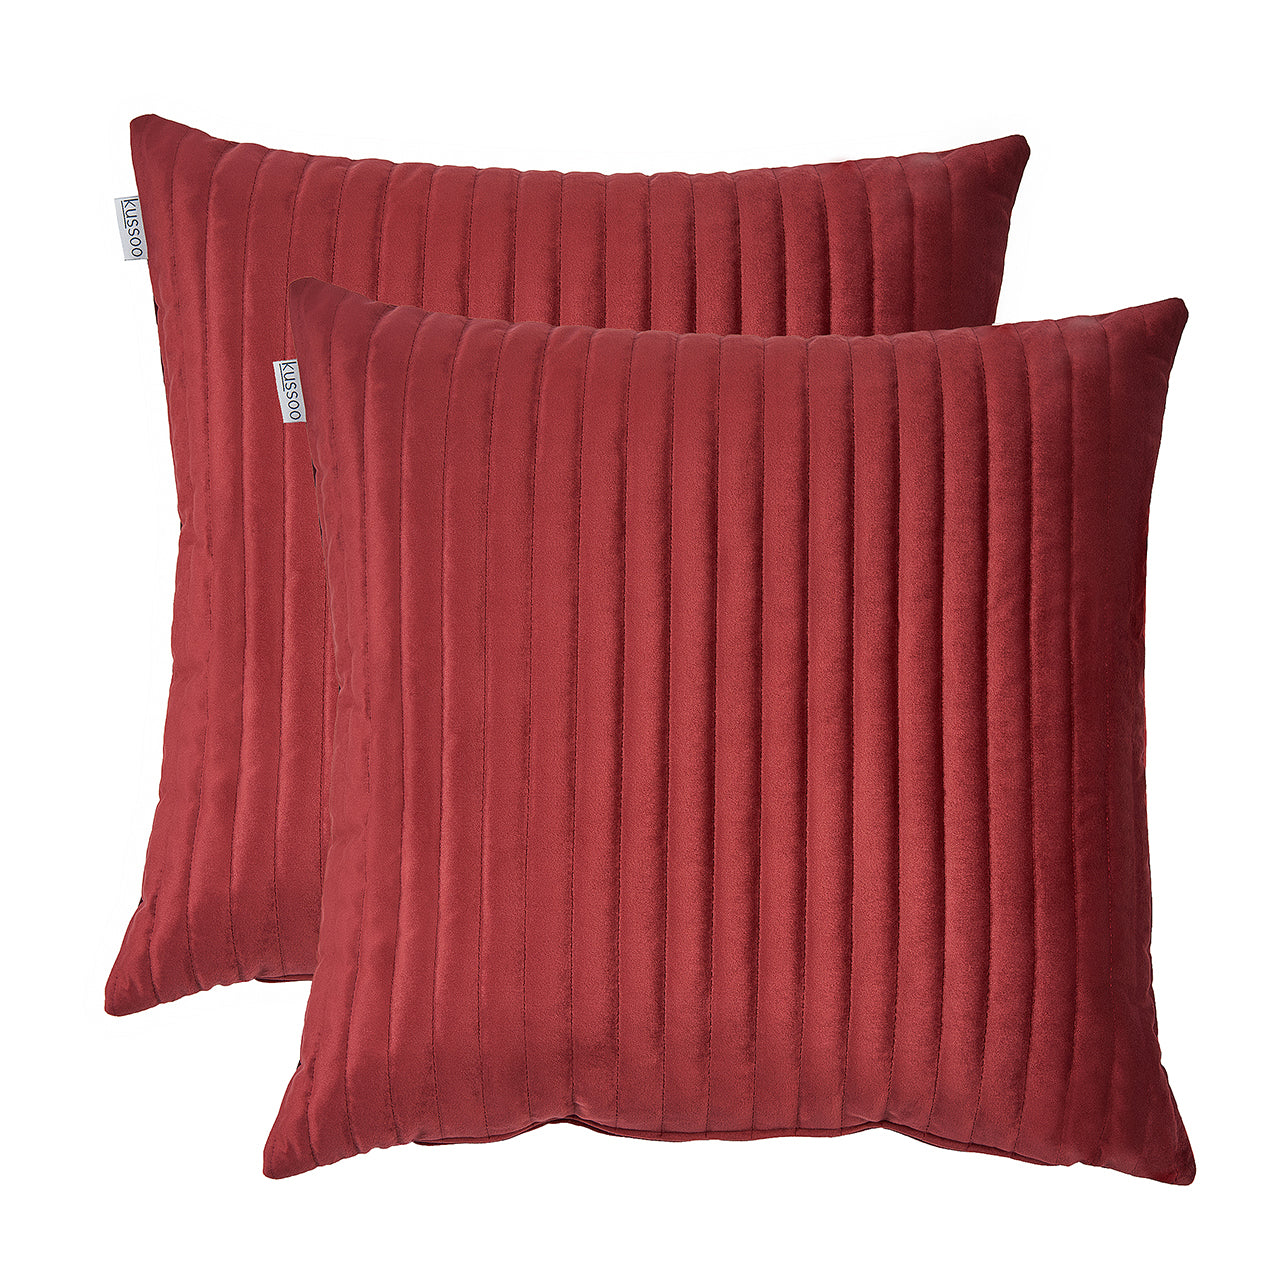 Kussenset-fluweel-bordeaux-rood-streep-50x50-cm